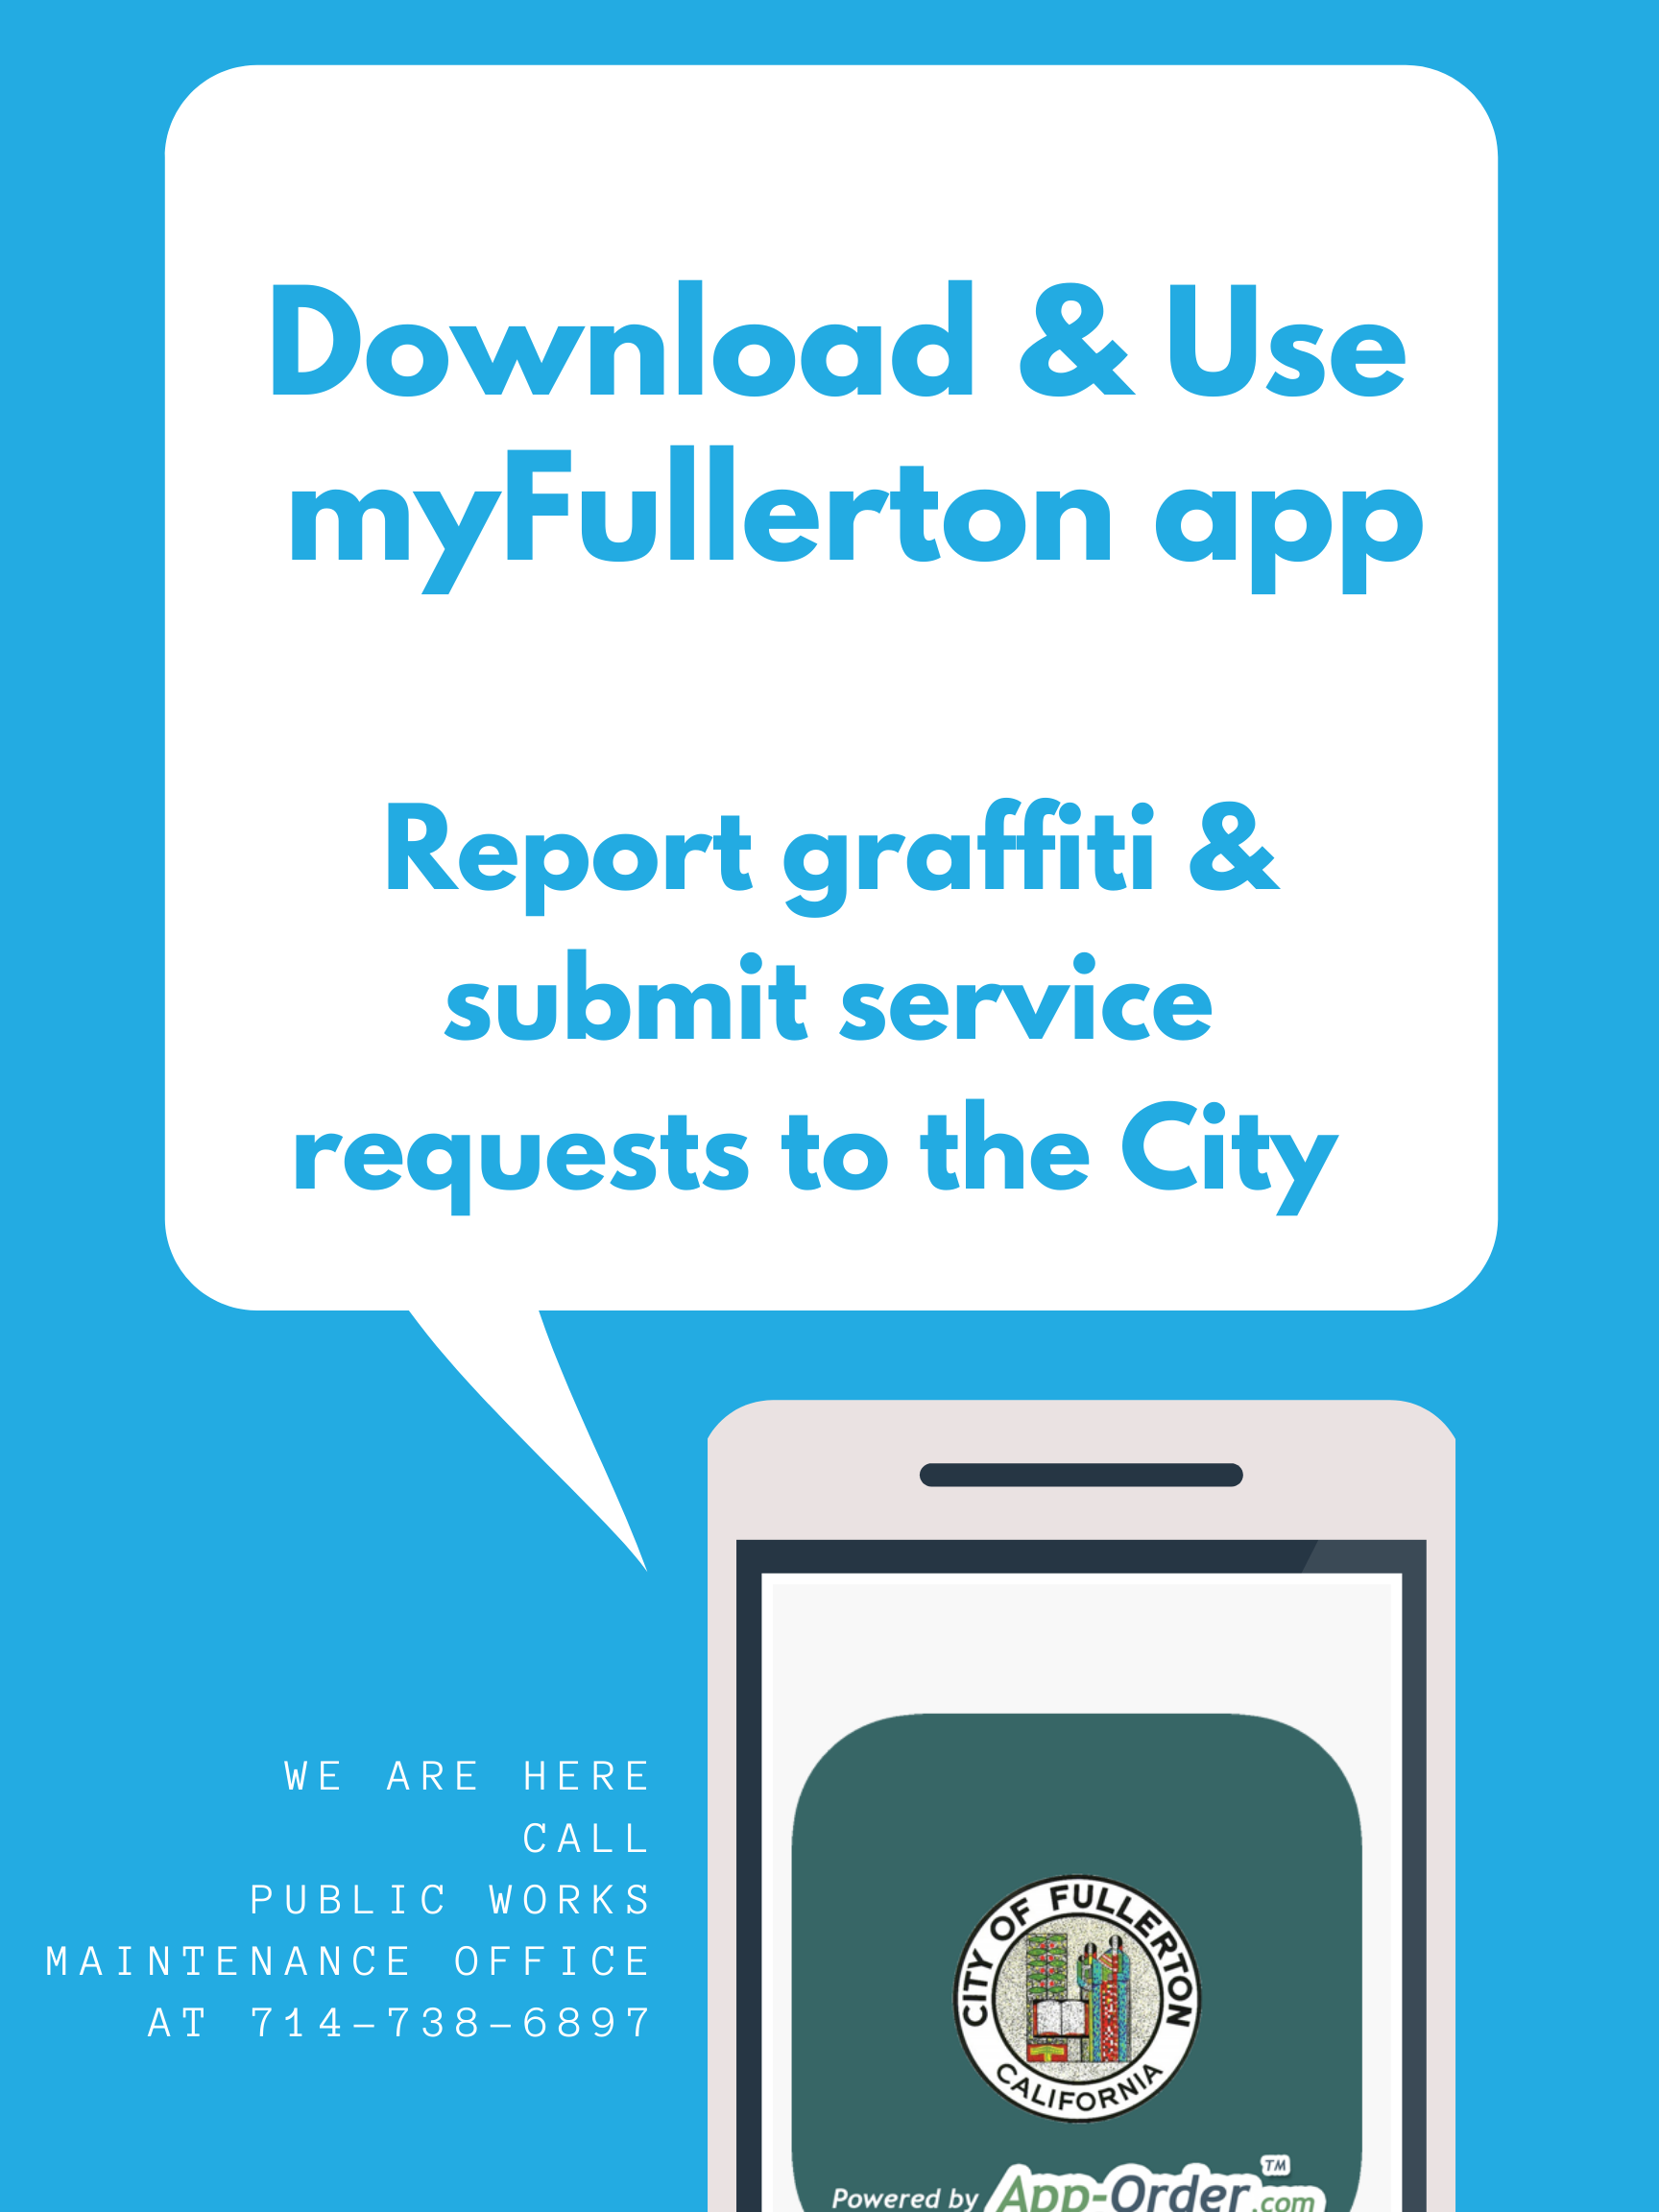 Download the myFullerton app